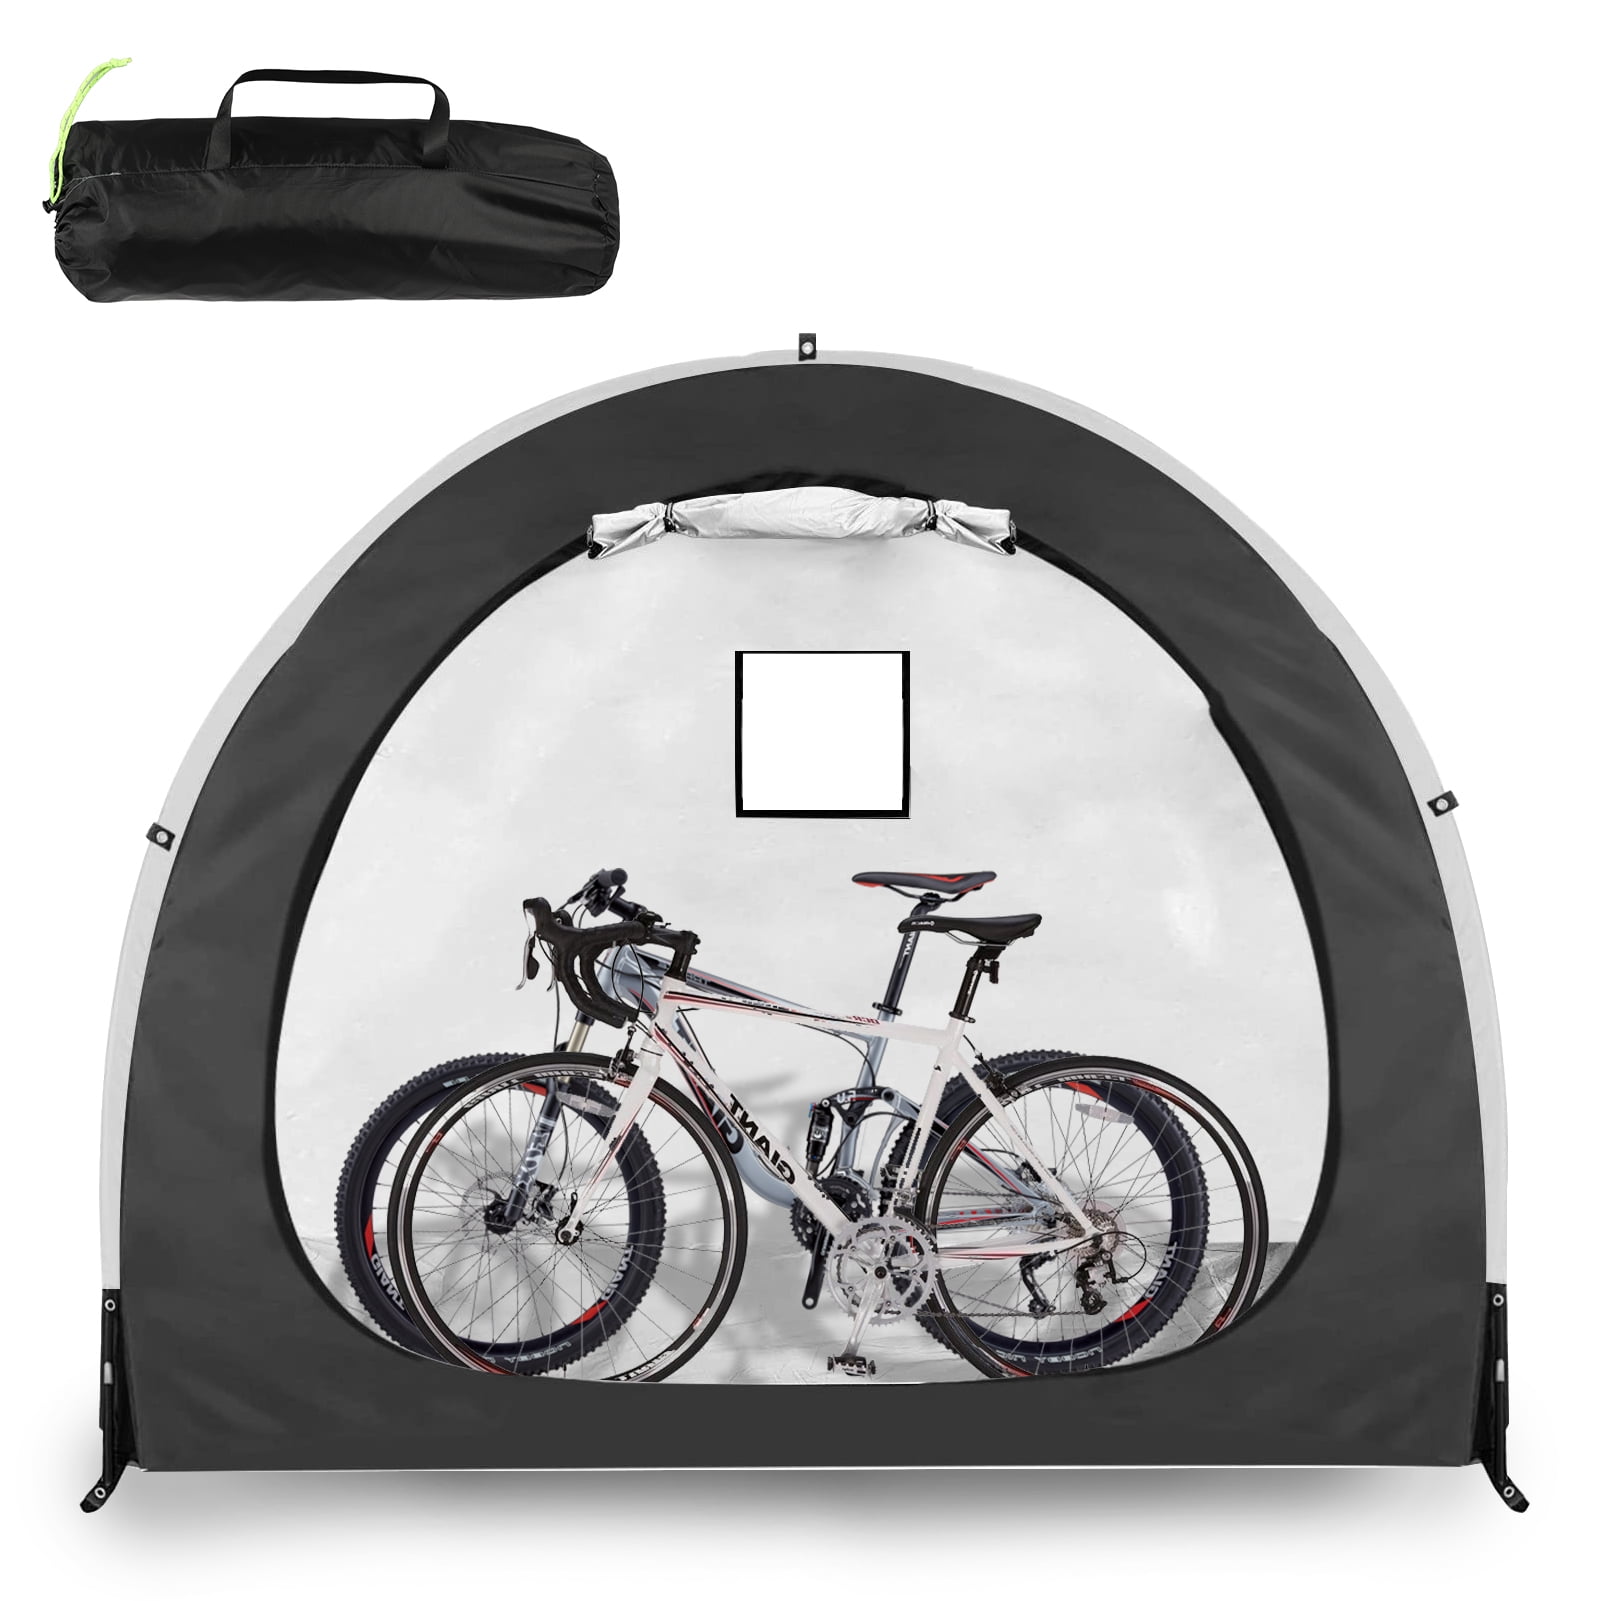 Waterproof Strengthen Bicycle Cover UK Bike Tent Outdoor Bike Storage Shed 210D 